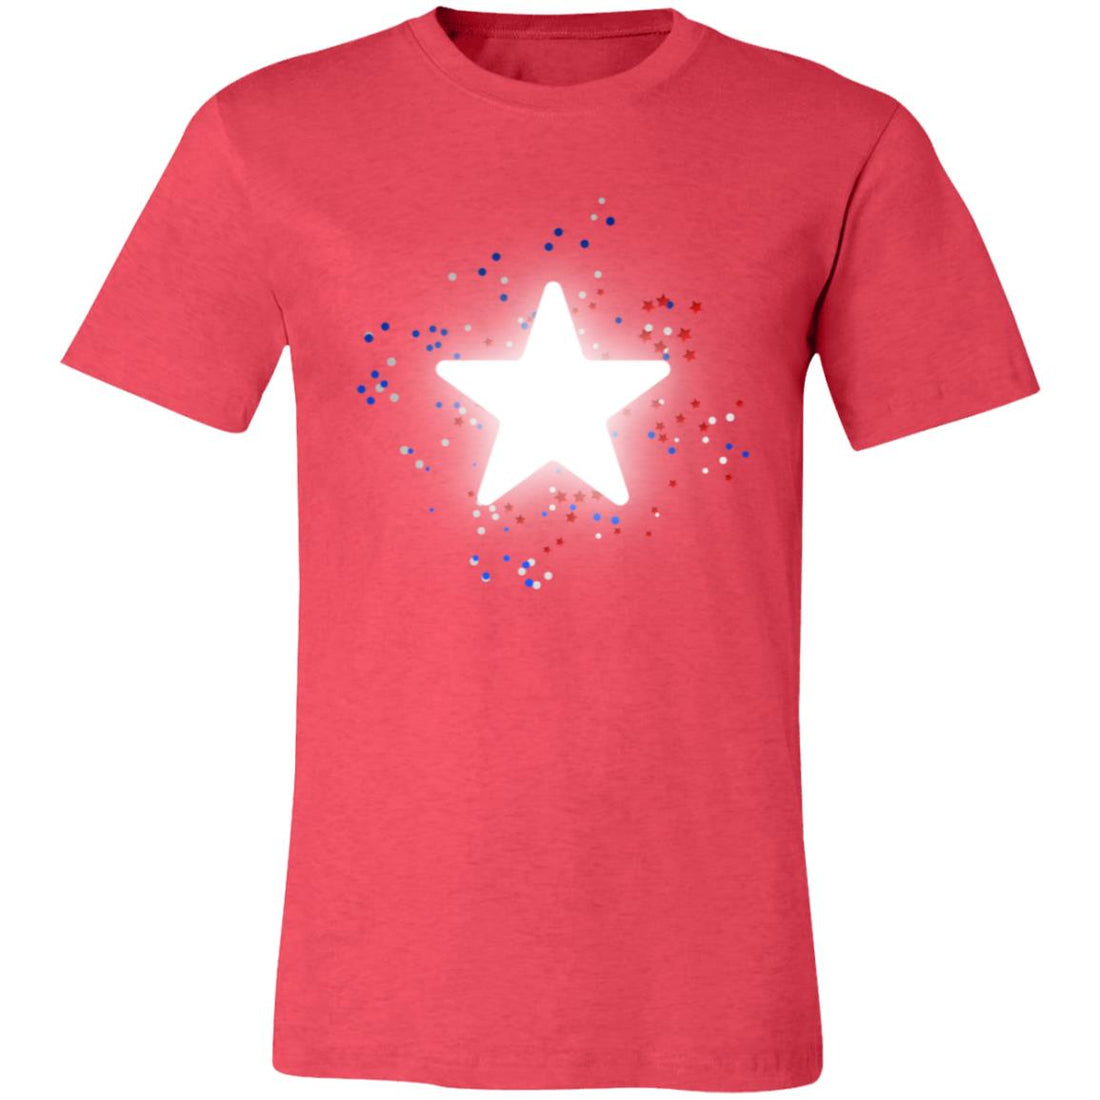 Star Spangled Glitter T-Shirt - T-Shirts - Positively Sassy - Star Spangled Glitter T-Shirt